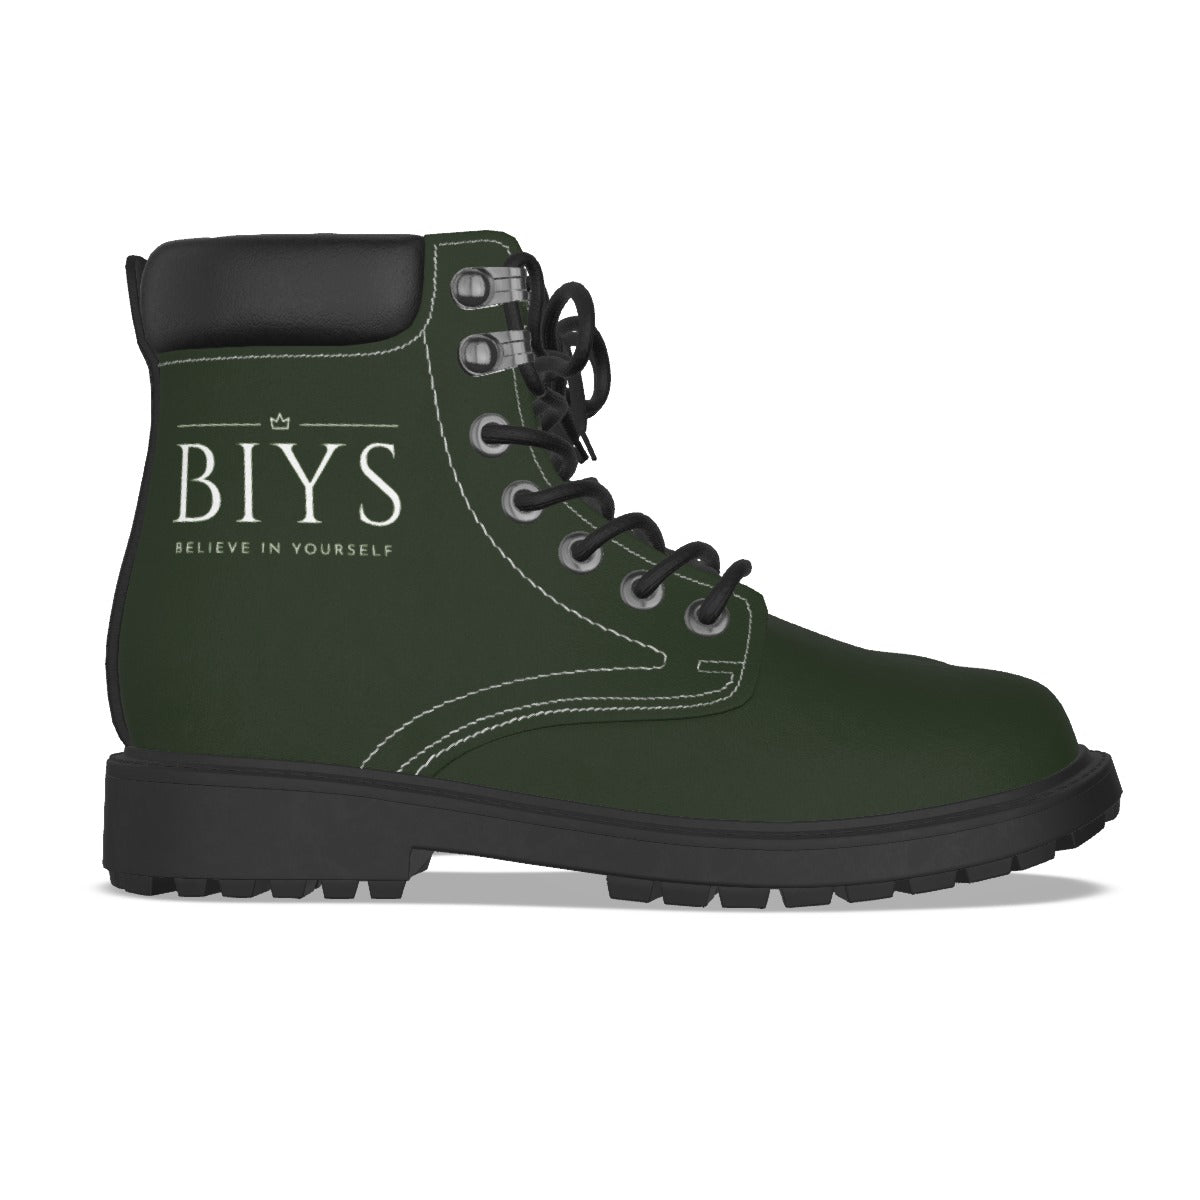 BIYS Men's Dark green Boots